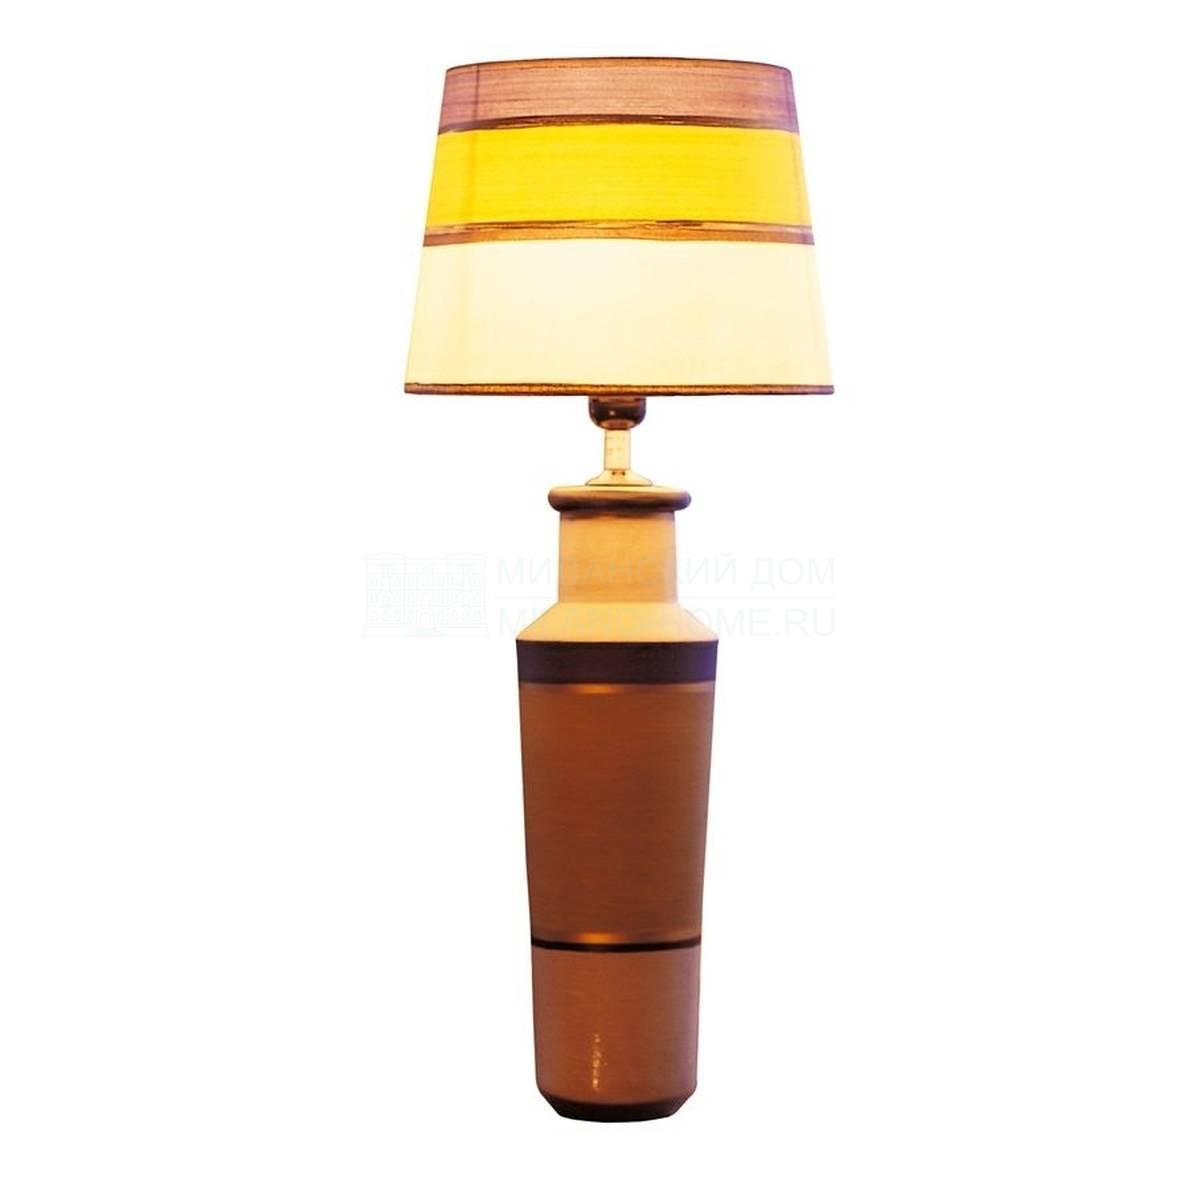 Настольная лампа 757 table lamp из Испании фабрики GUADARTE